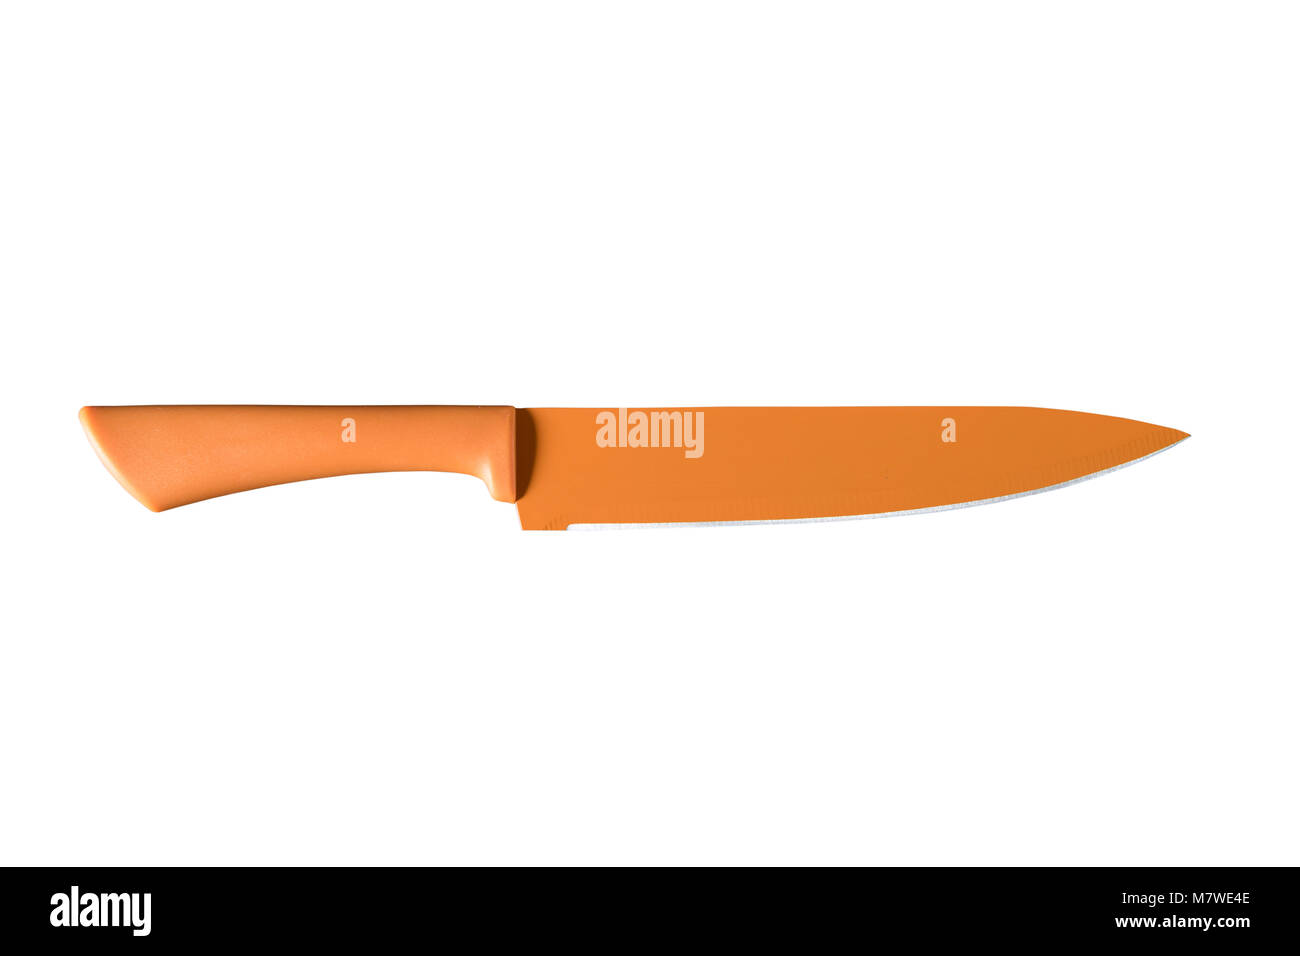 https://c8.alamy.com/comp/M7WE4E/big-orange-kitchen-knife-isolated-on-white-background-path-saved-clipping-M7WE4E.jpg